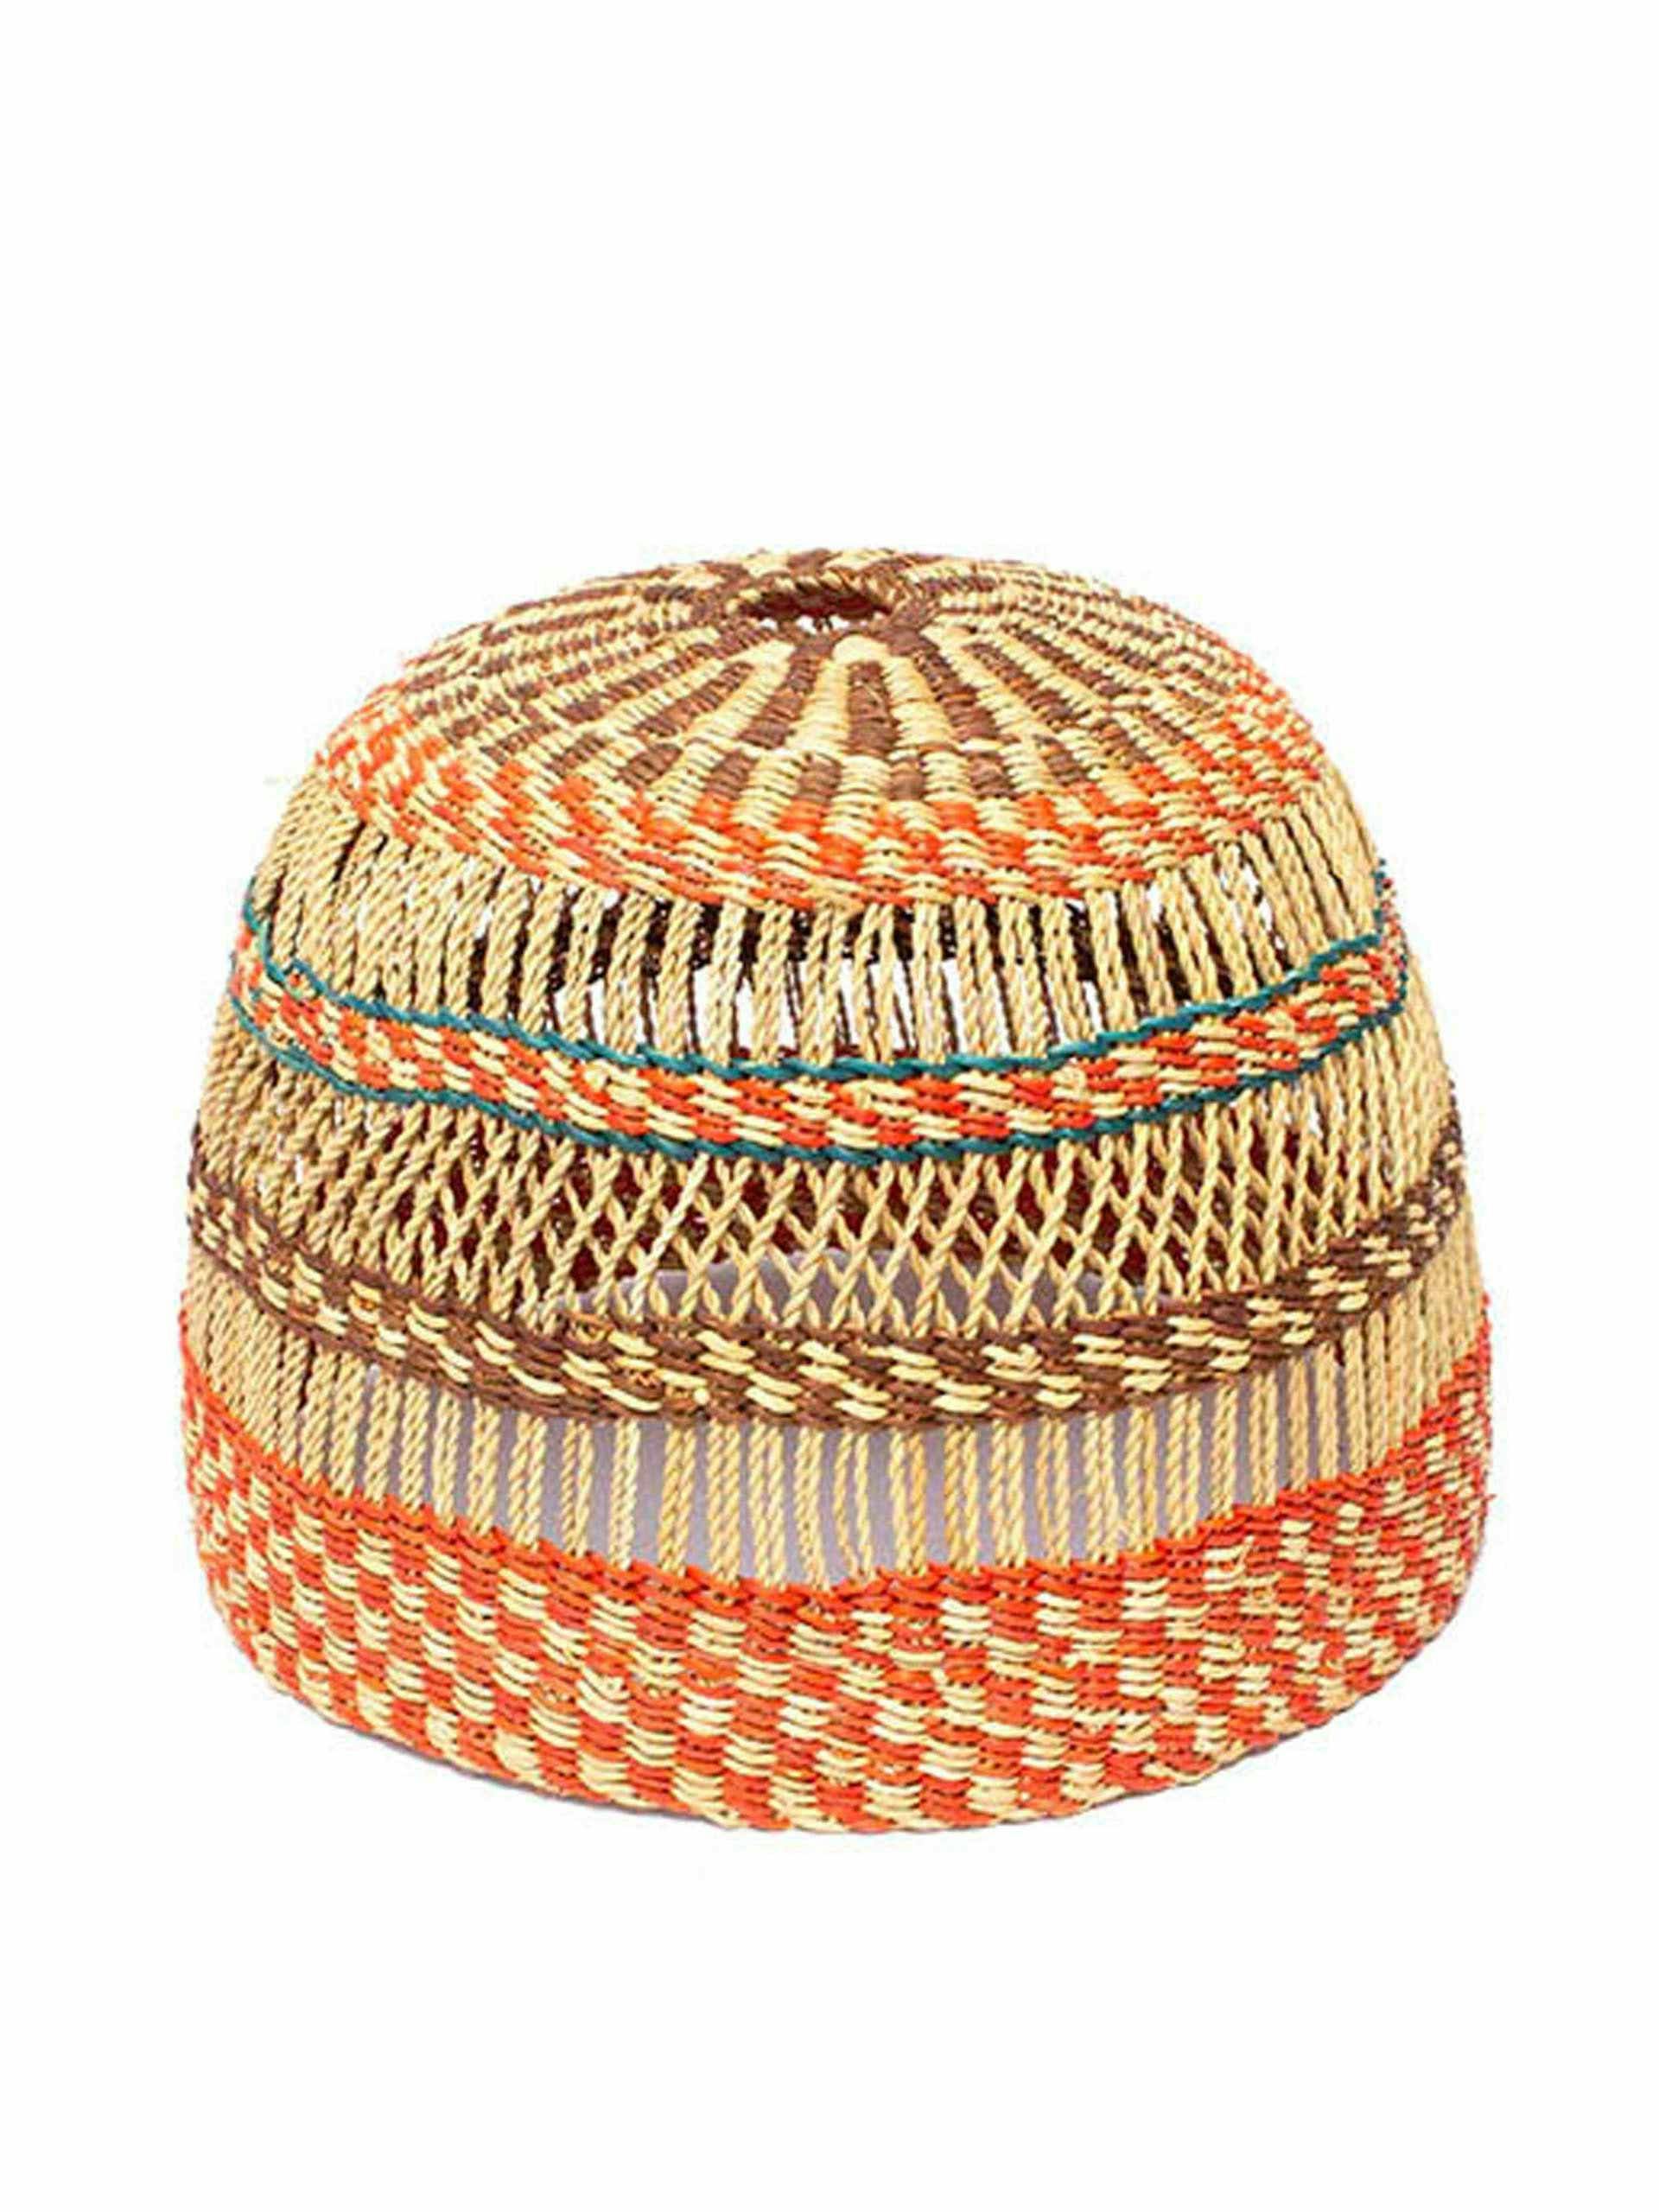 Ghanaian hand woven dome light shade